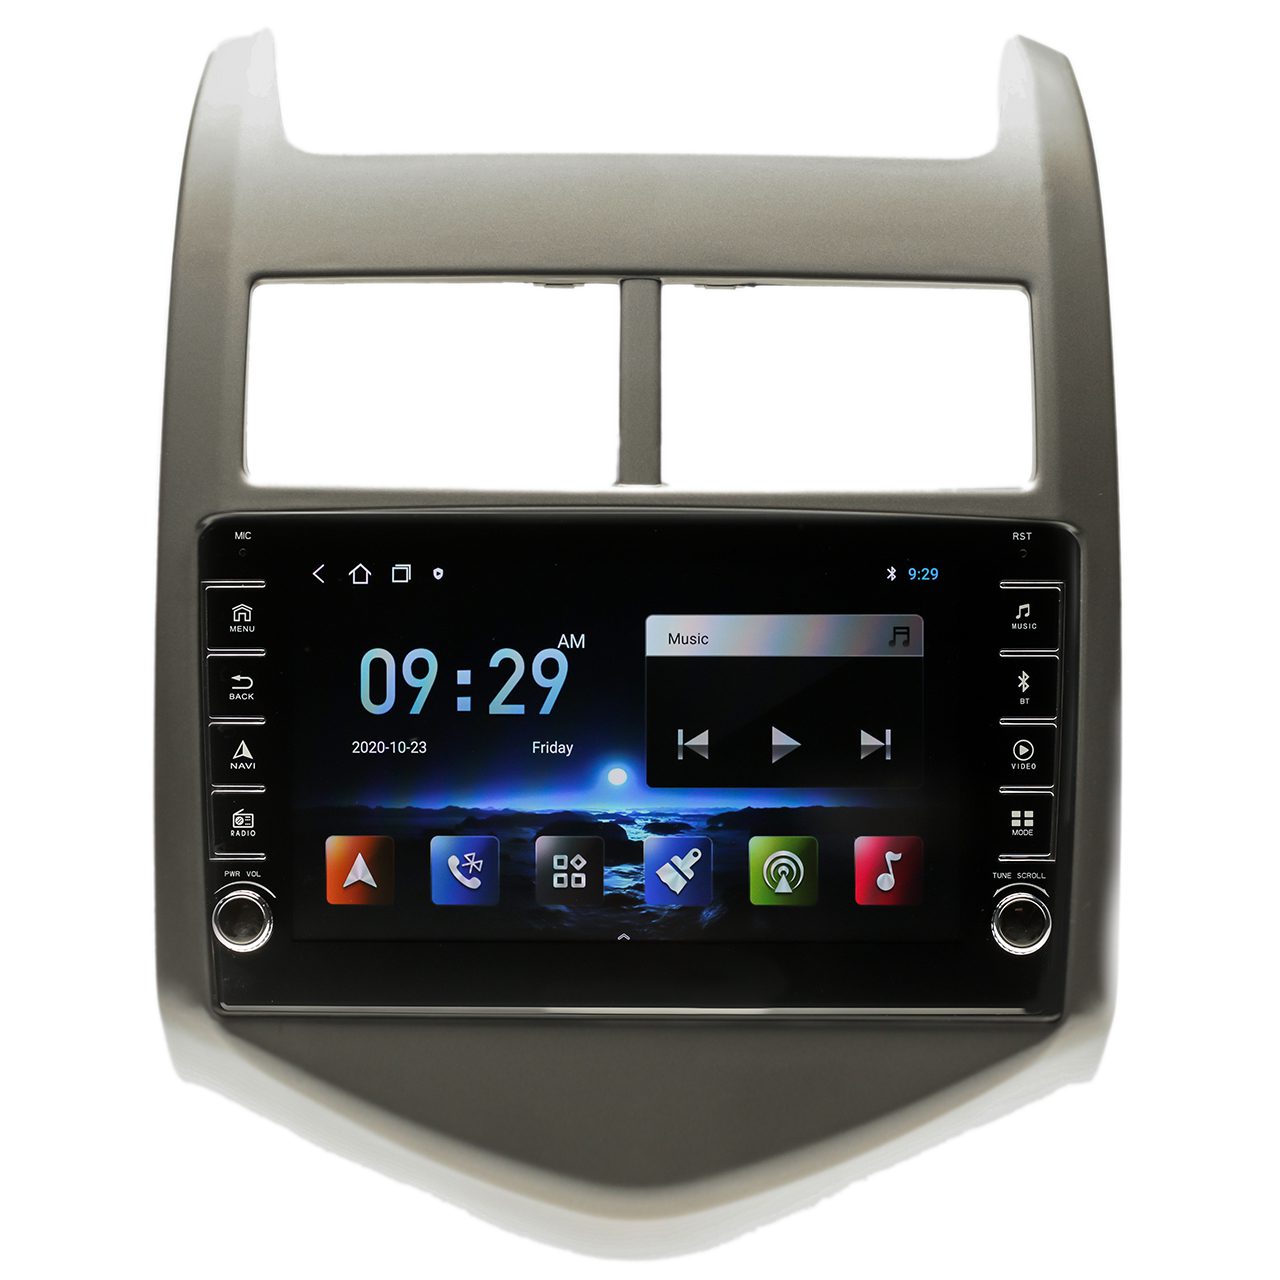 Navigatie AUTONAV PLUS Android GPS Dedicata Chevrolet Aveo T300 2011-2015, Model PRO Memorie 16GB Stocare, 1GB DDR3 RAM, Butoane Laterale Si Regulator Volum, Display 8